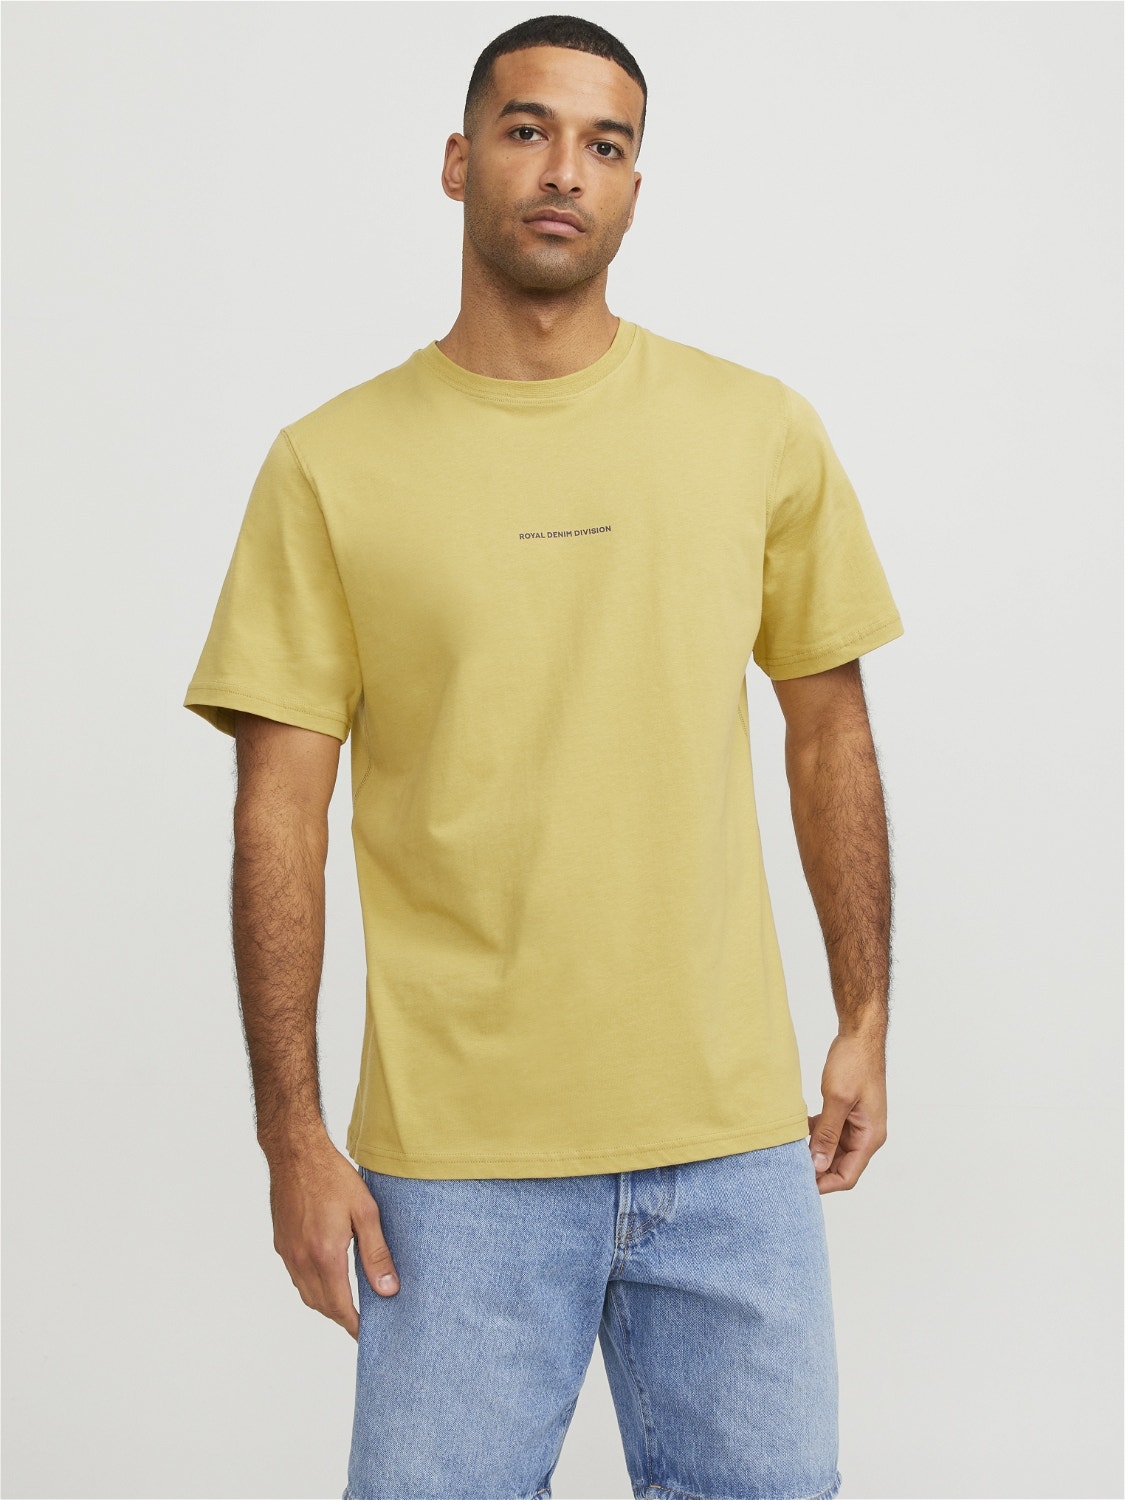 Jack & Jones RDD Printet Crew neck T-shirt -Antique Gold - 12252153